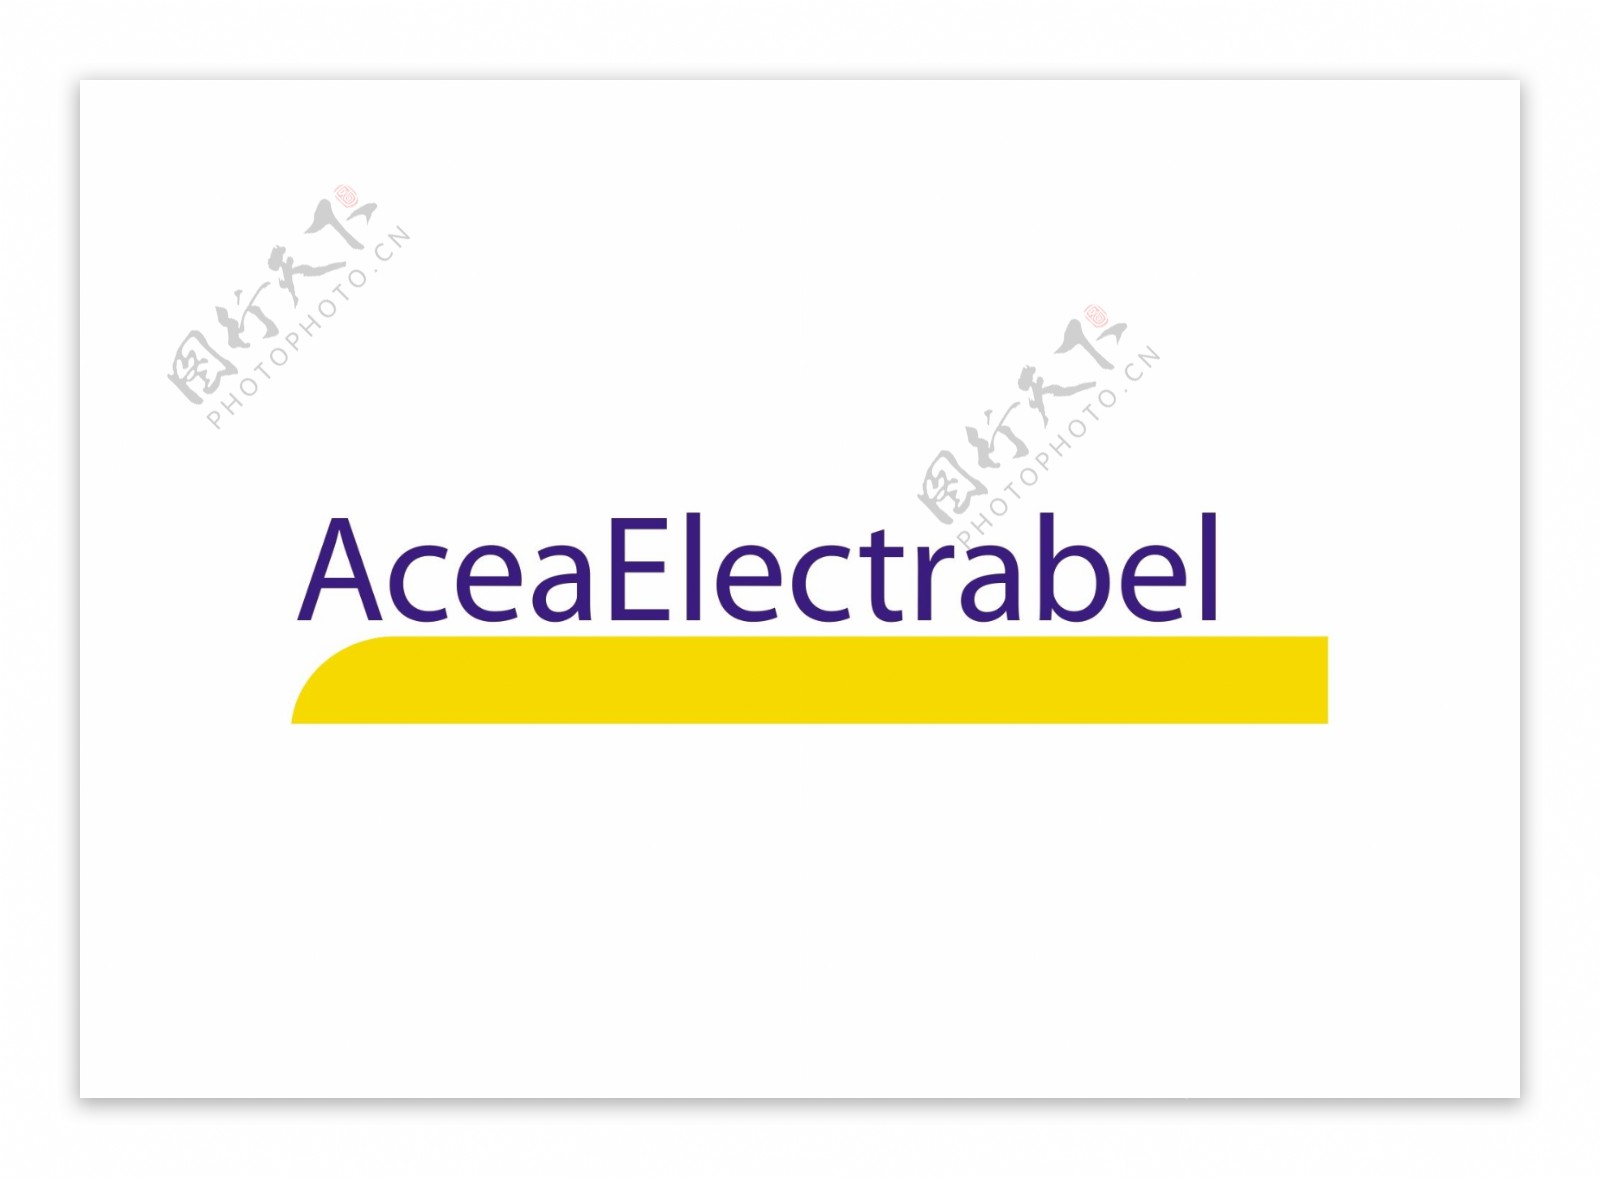 AceaElectrabellogo设计欣赏AceaElectrabel服务行业标志下载标志设计欣赏